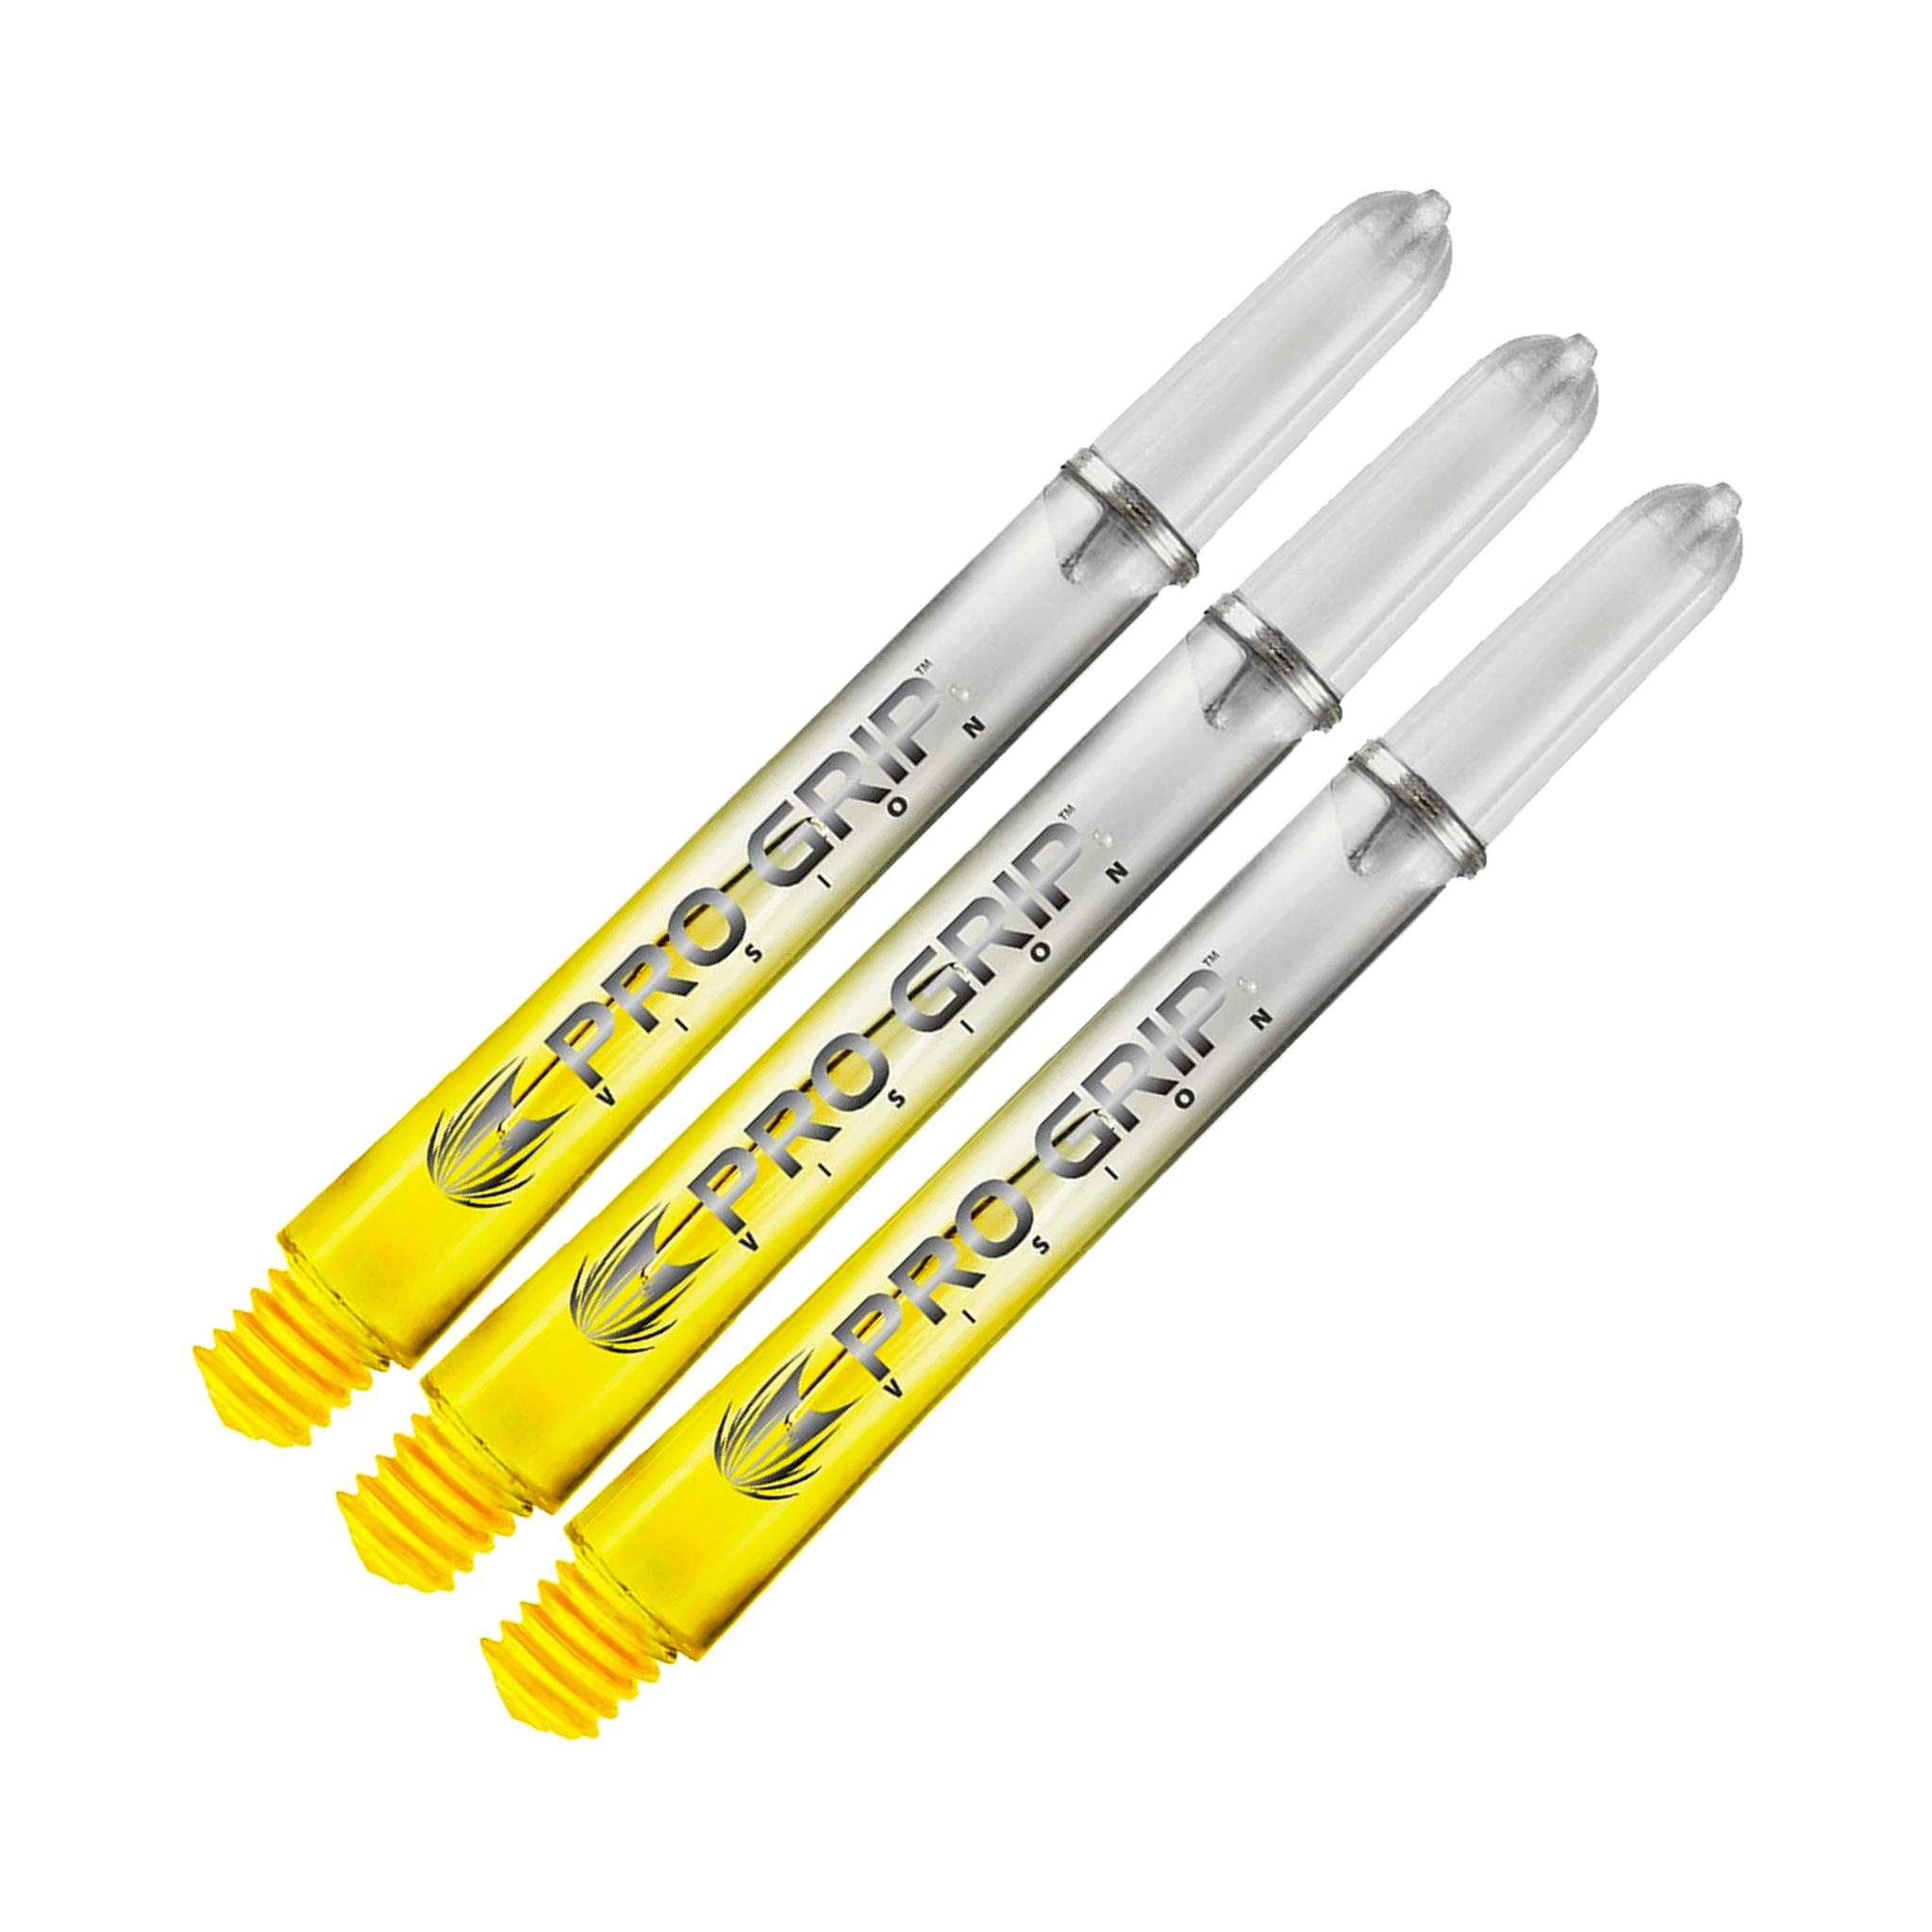 Target Pro Vision - Polycarbonate Dart Shafts Medium (48mm) / Yellow Shafts